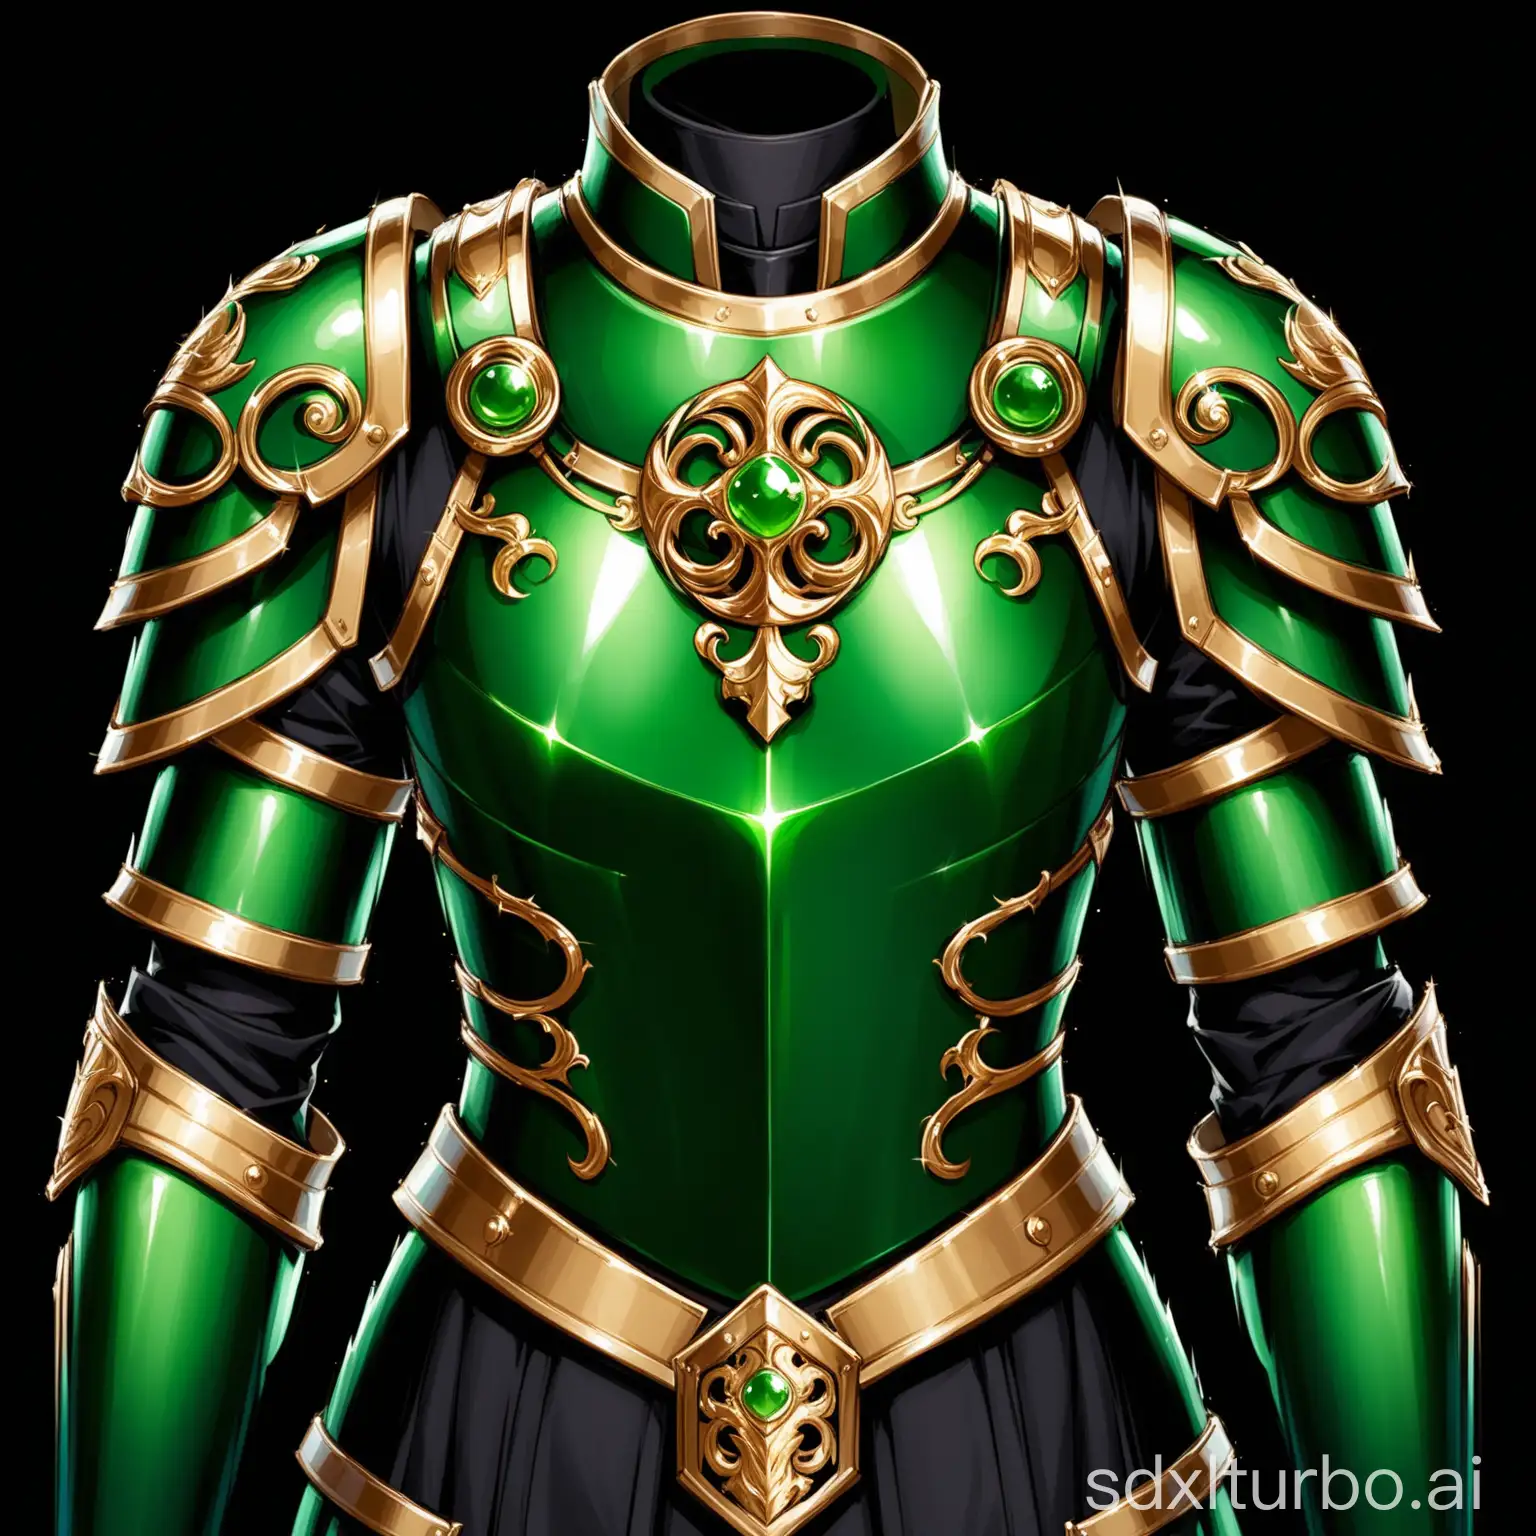 Elegant-Jade-Chest-Armor-on-Uniform-Black-Background